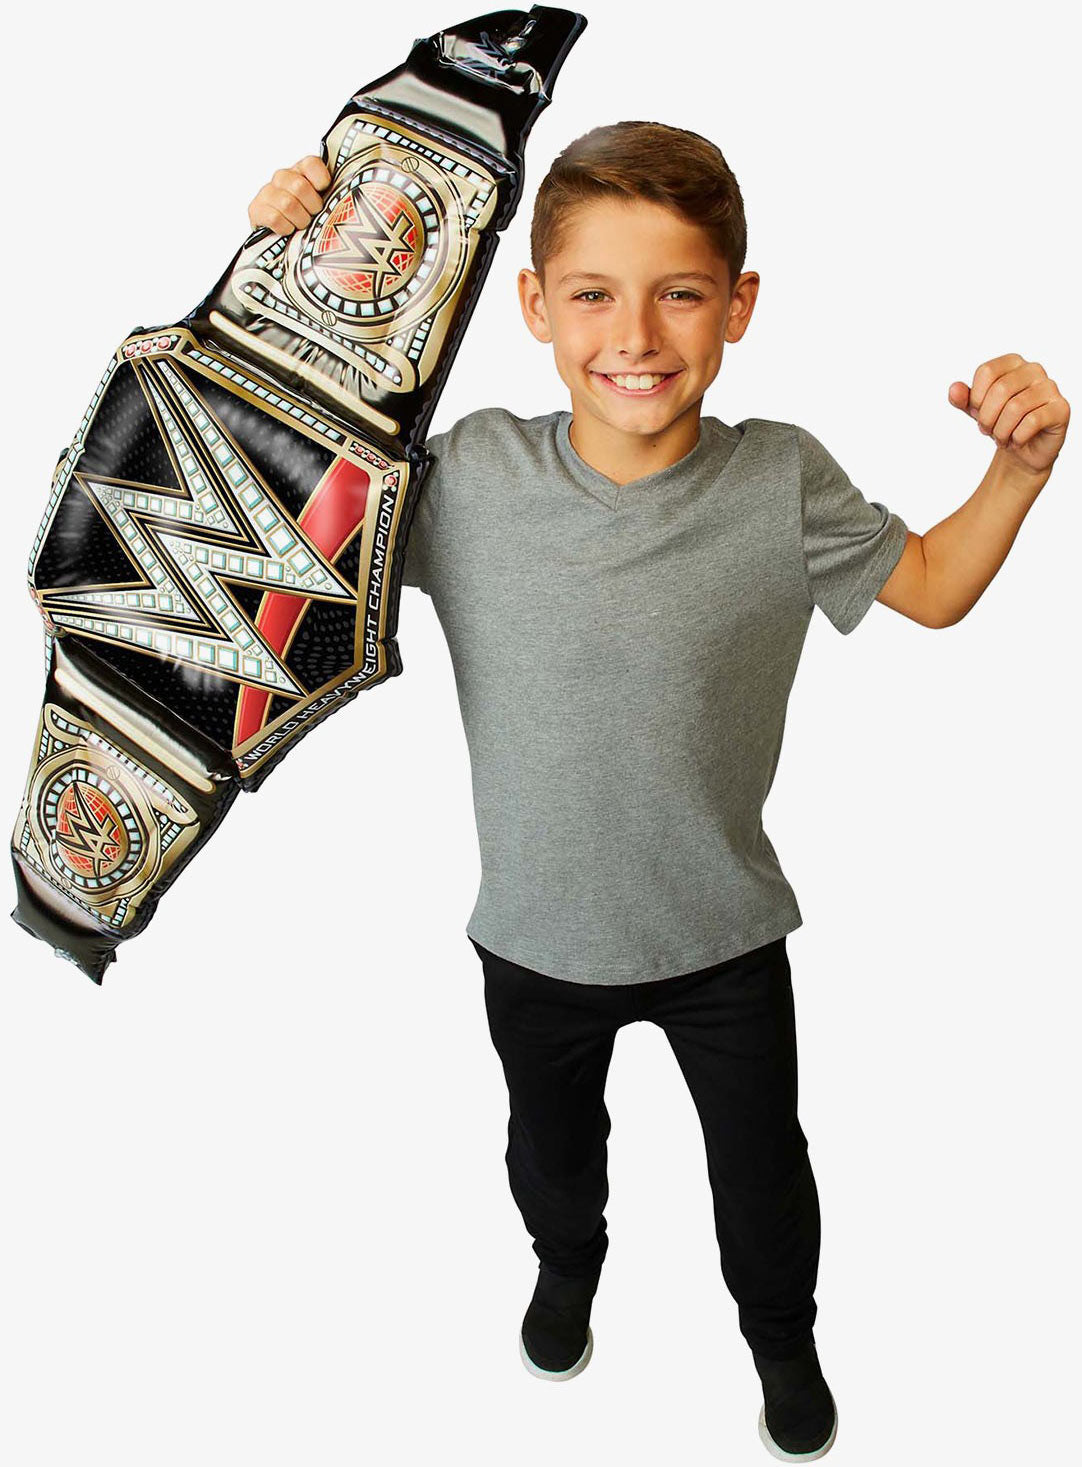 WWE Inflatable Championship Belt